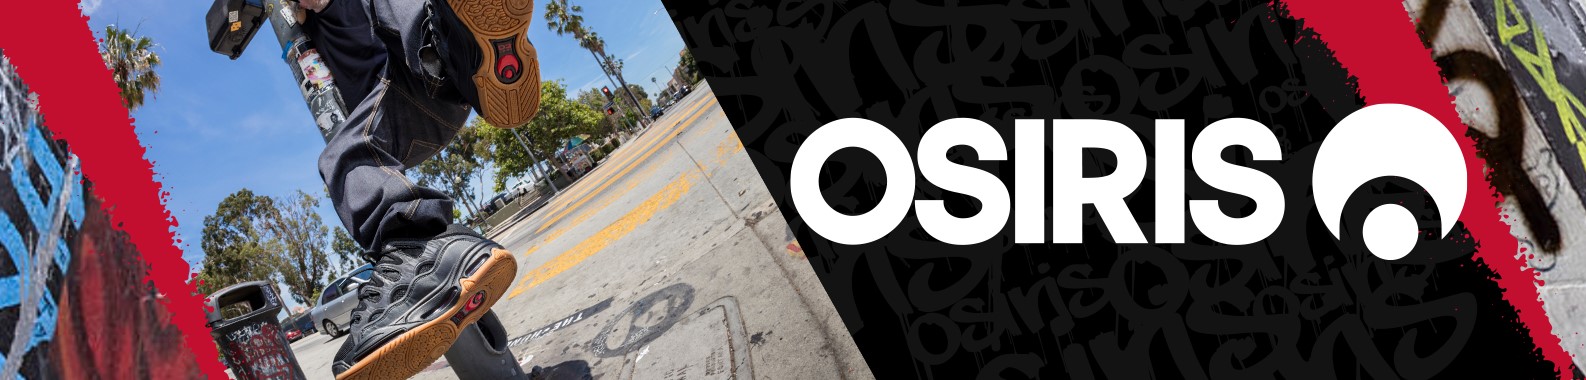 Osiris brand header image